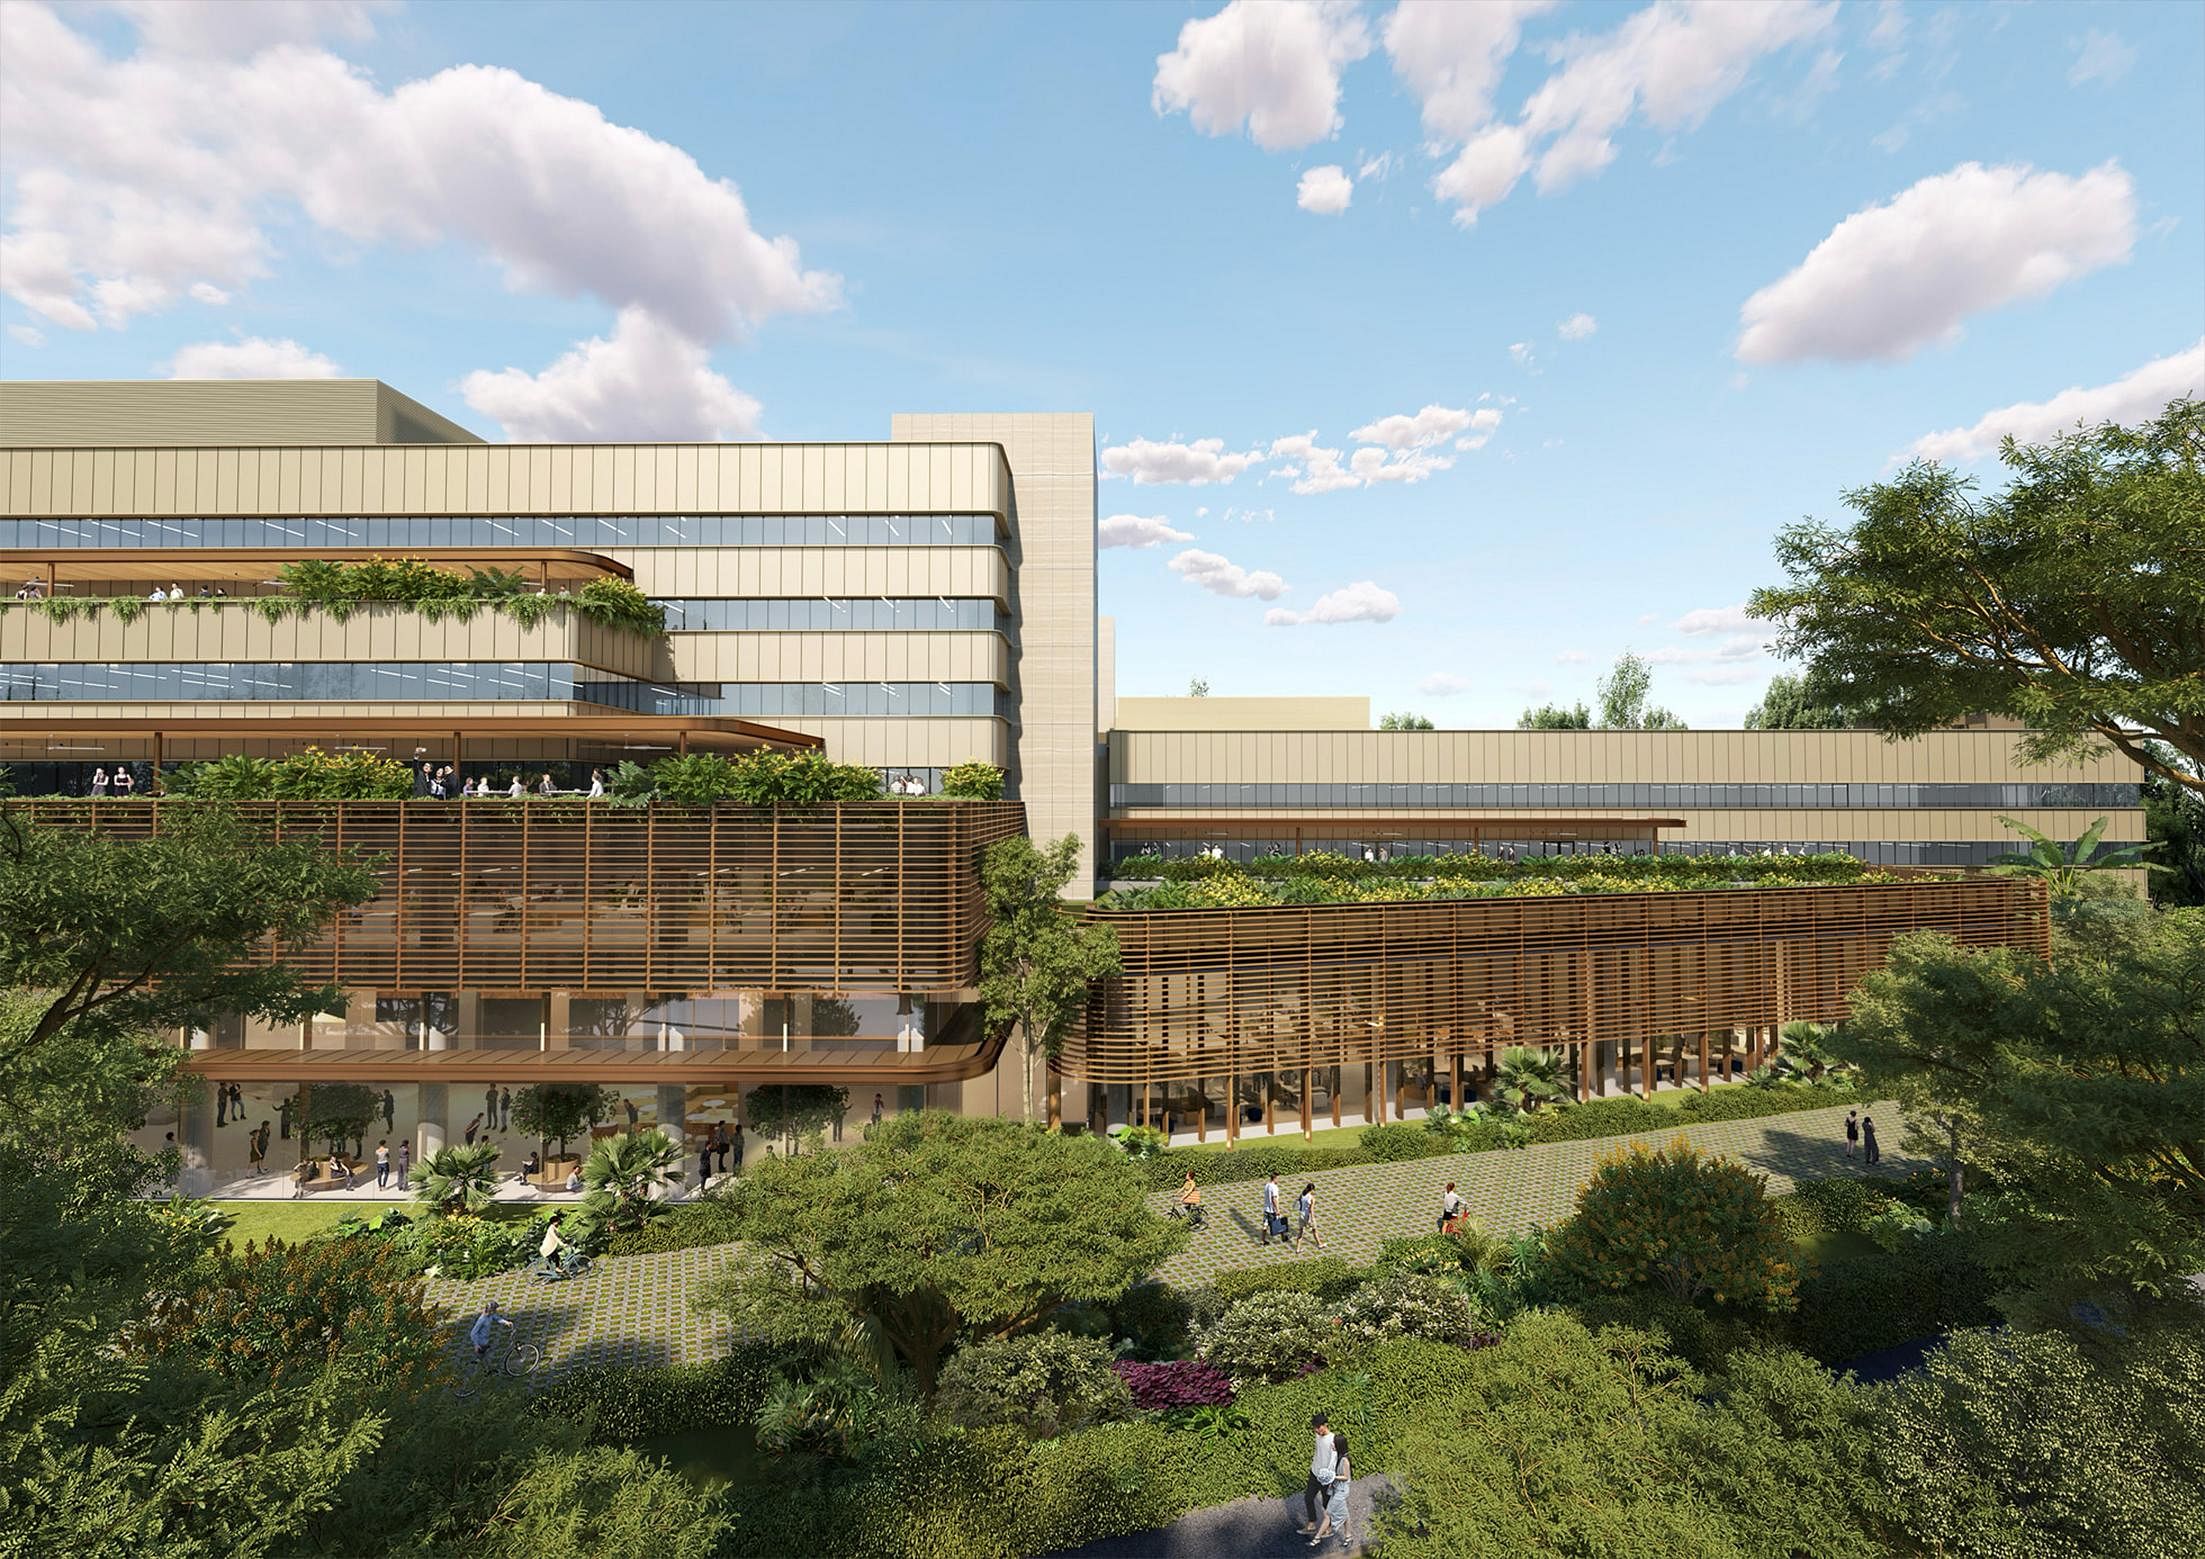 Apple to spend $340 million to renovate, expand Ang Mo Kio campus